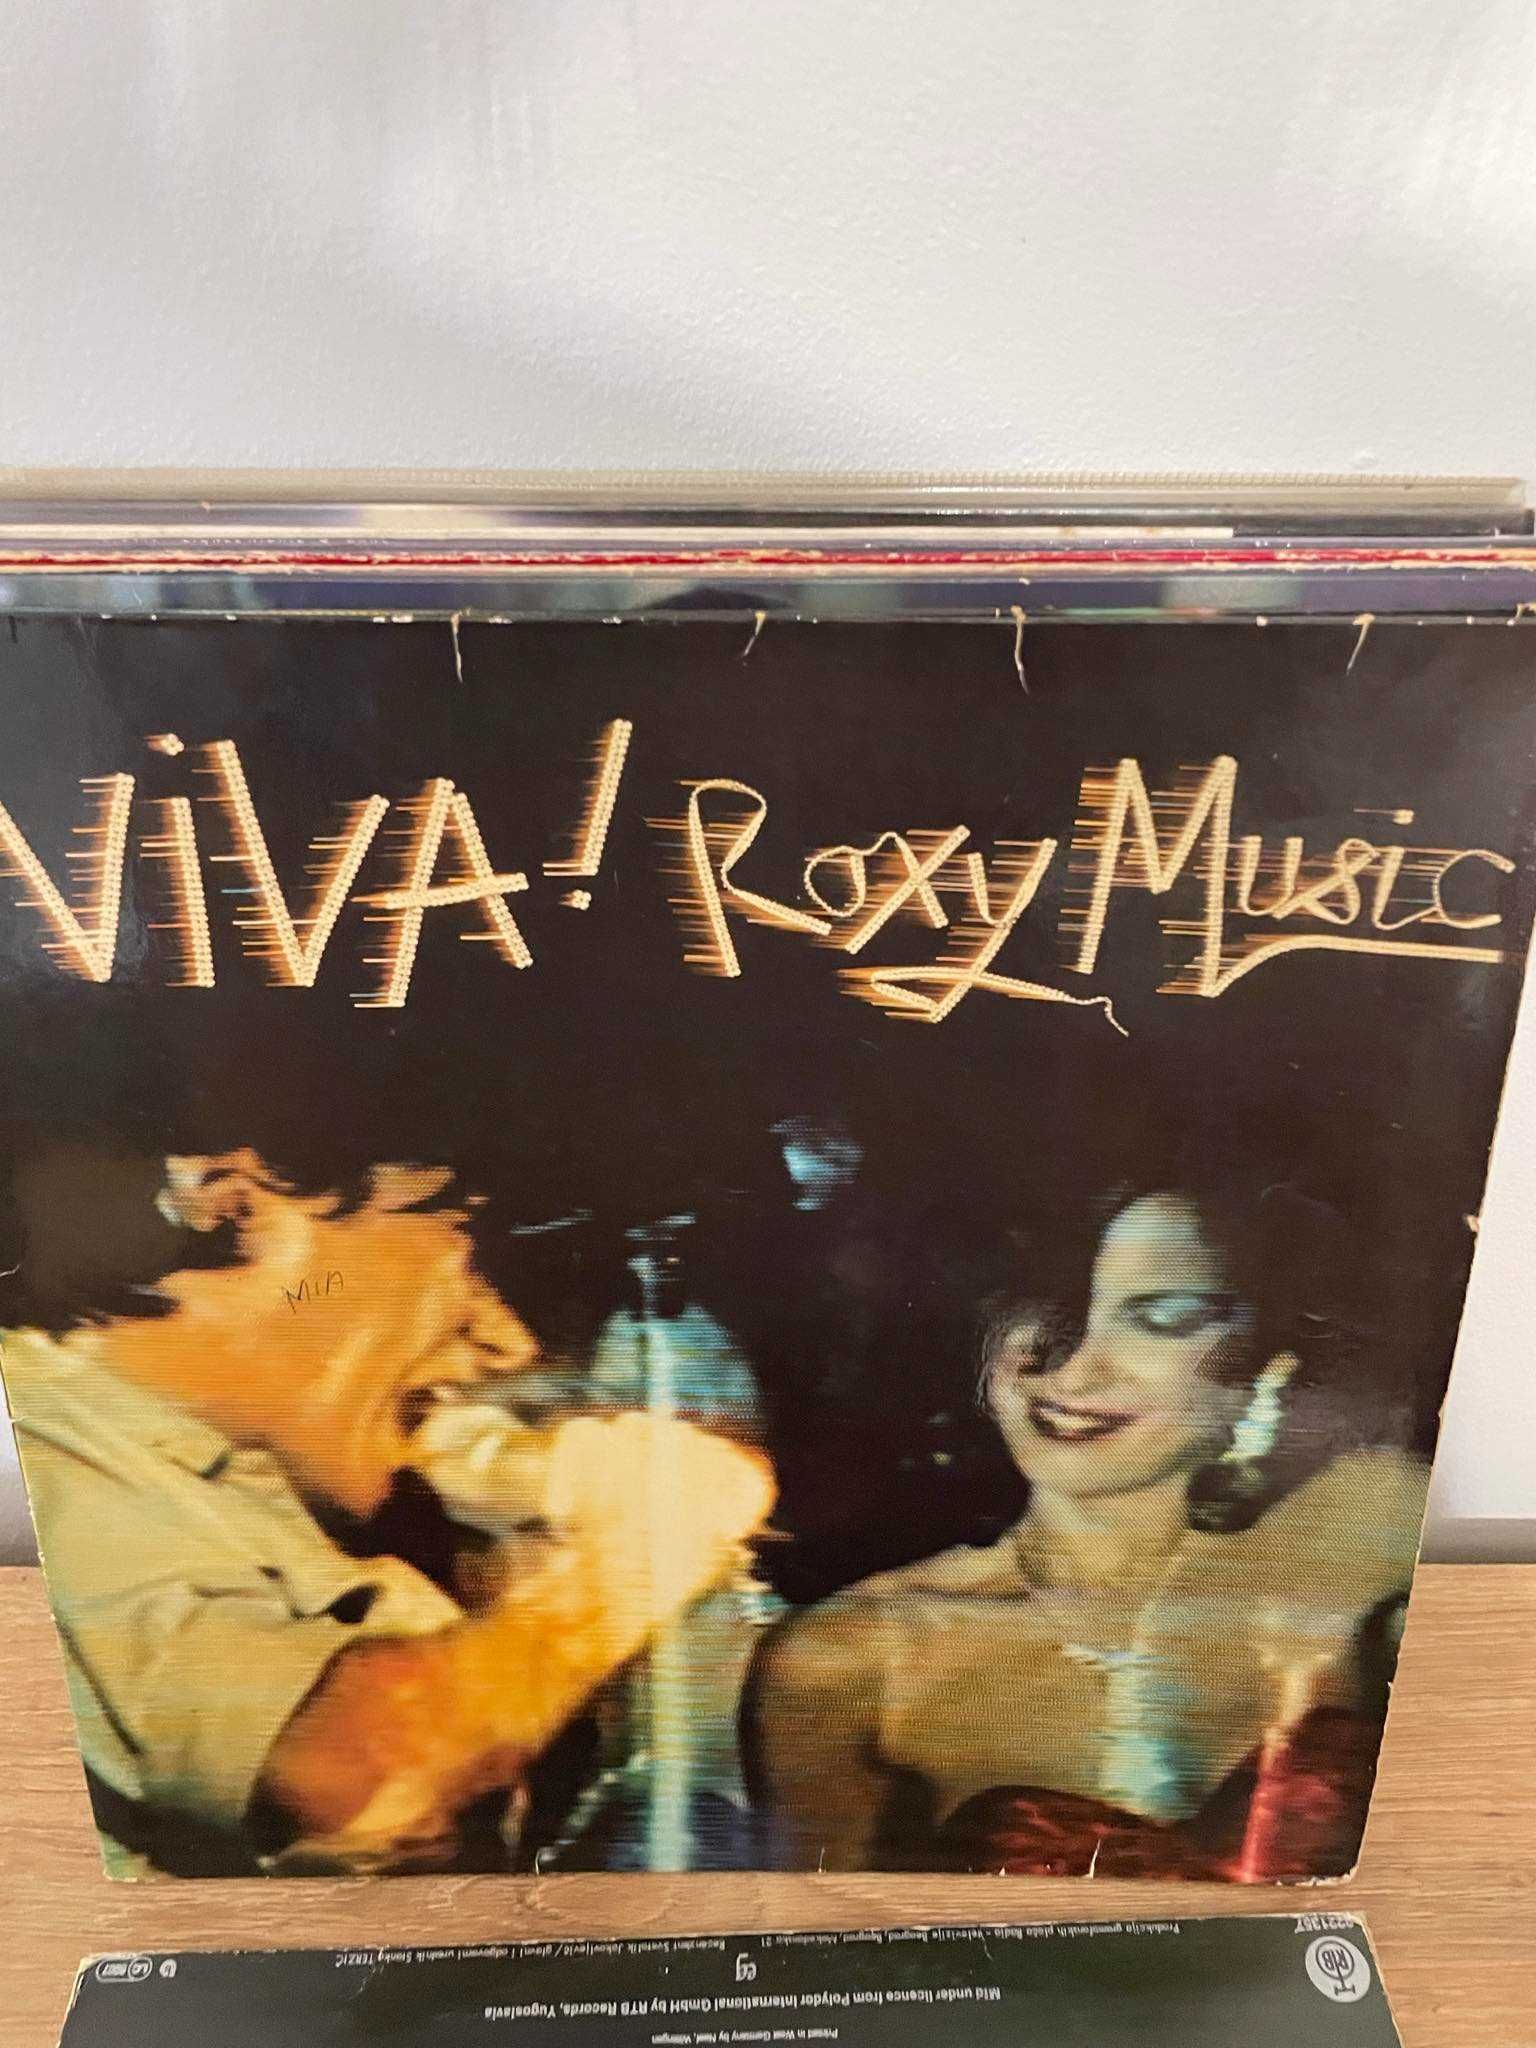 Roxy Music – Viva! Roxy Music